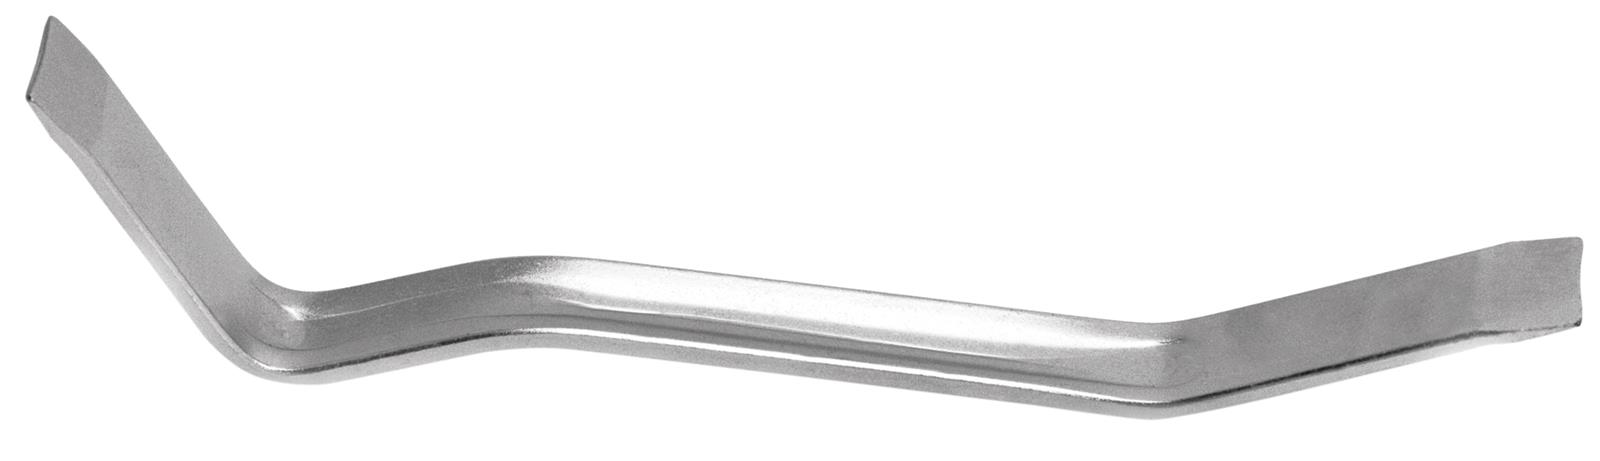 Performance Tool W80630 Universal Offset Brake Spoon, 